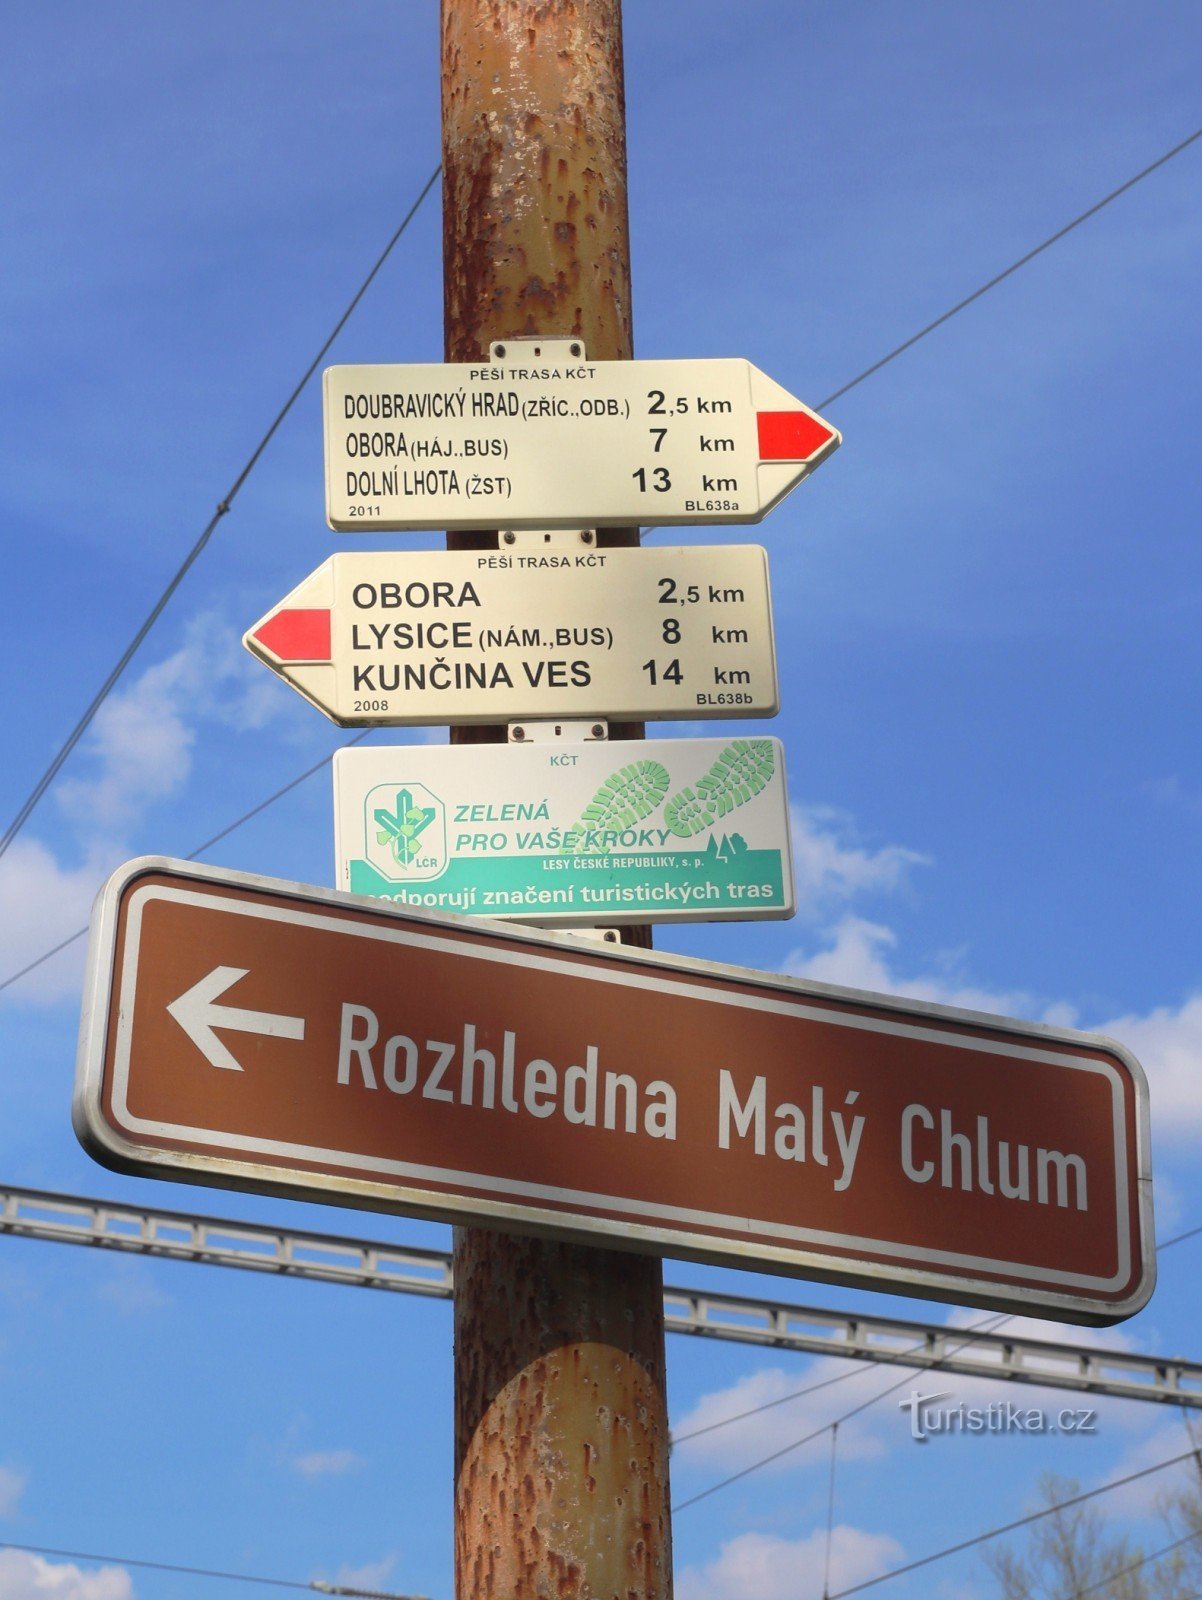 Cruzamento turístico de Doubravice nad Svitavou